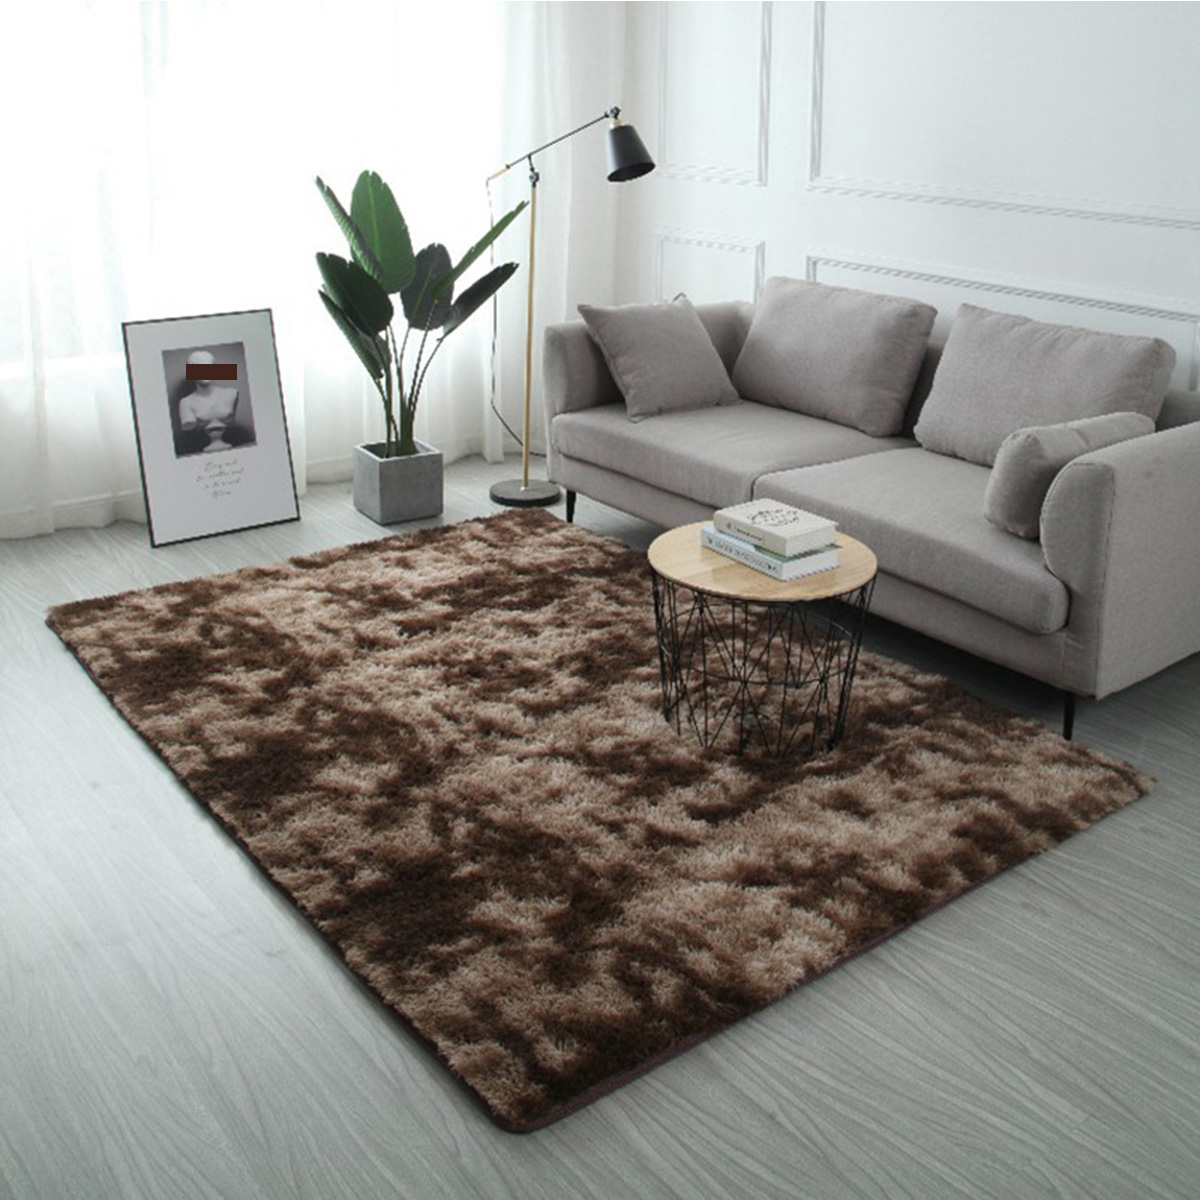 3-SIZE-Pad-Dyed-Gradient-Silk-Wool-Carpet-Super-Soft-Rug-Indoor-Modern-Shag-Area-Rug-Silky-Rugs-Bedr-1602690-4